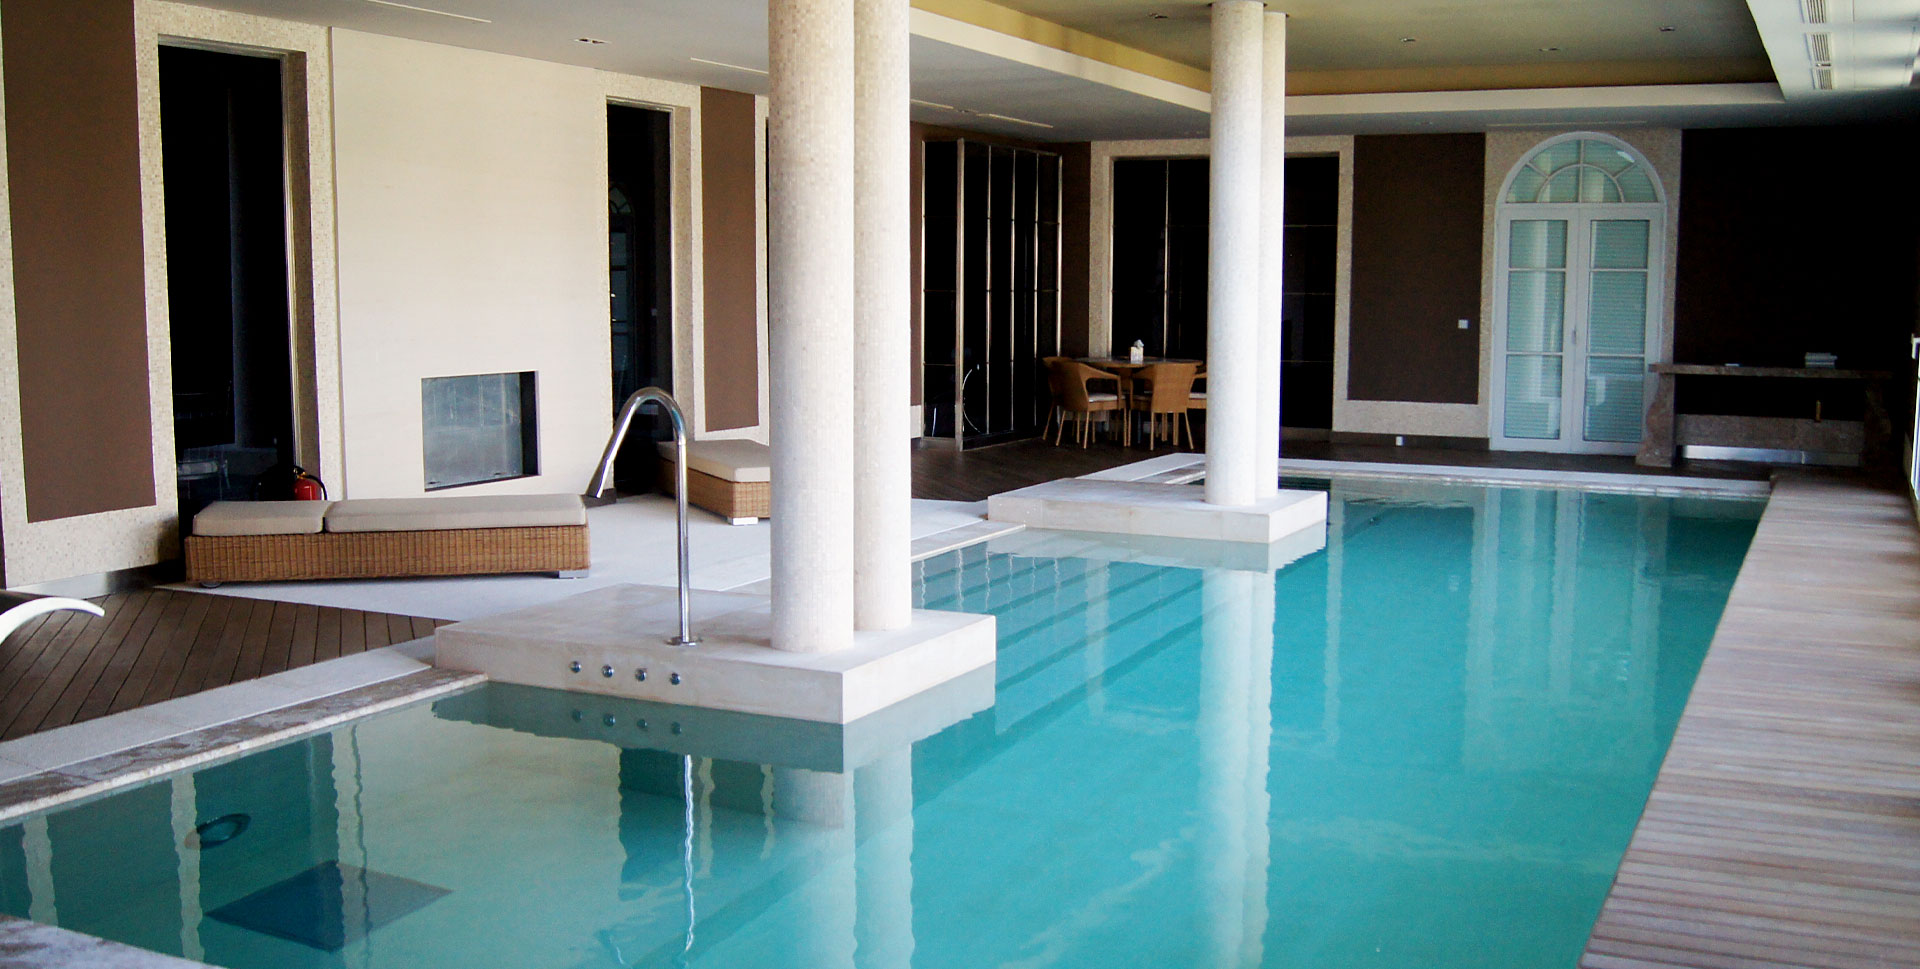 Traditional and designer pools, Factum Balear